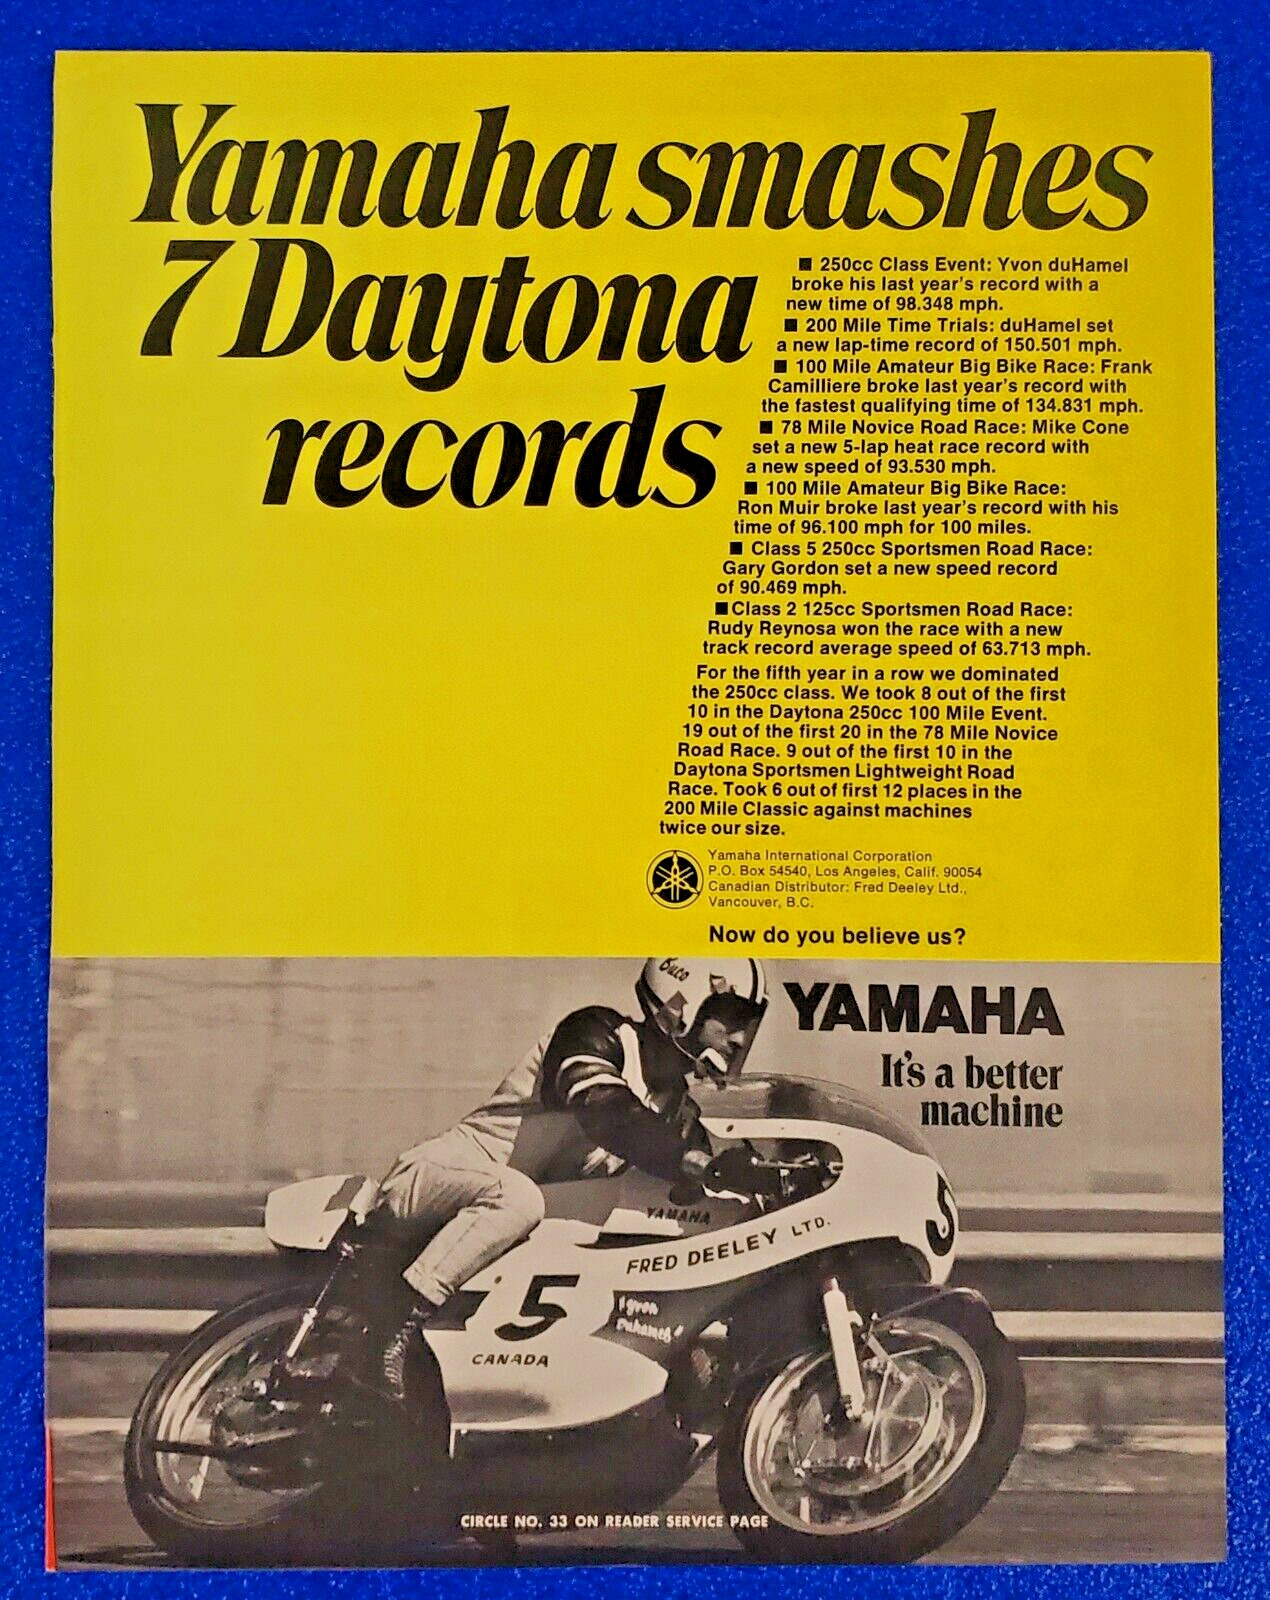 1969 CLASSIC YAMAHA RACING MOTORCYCLE PRINT AD YAMAHA SMASHES 7 DAYTONA RECORDS